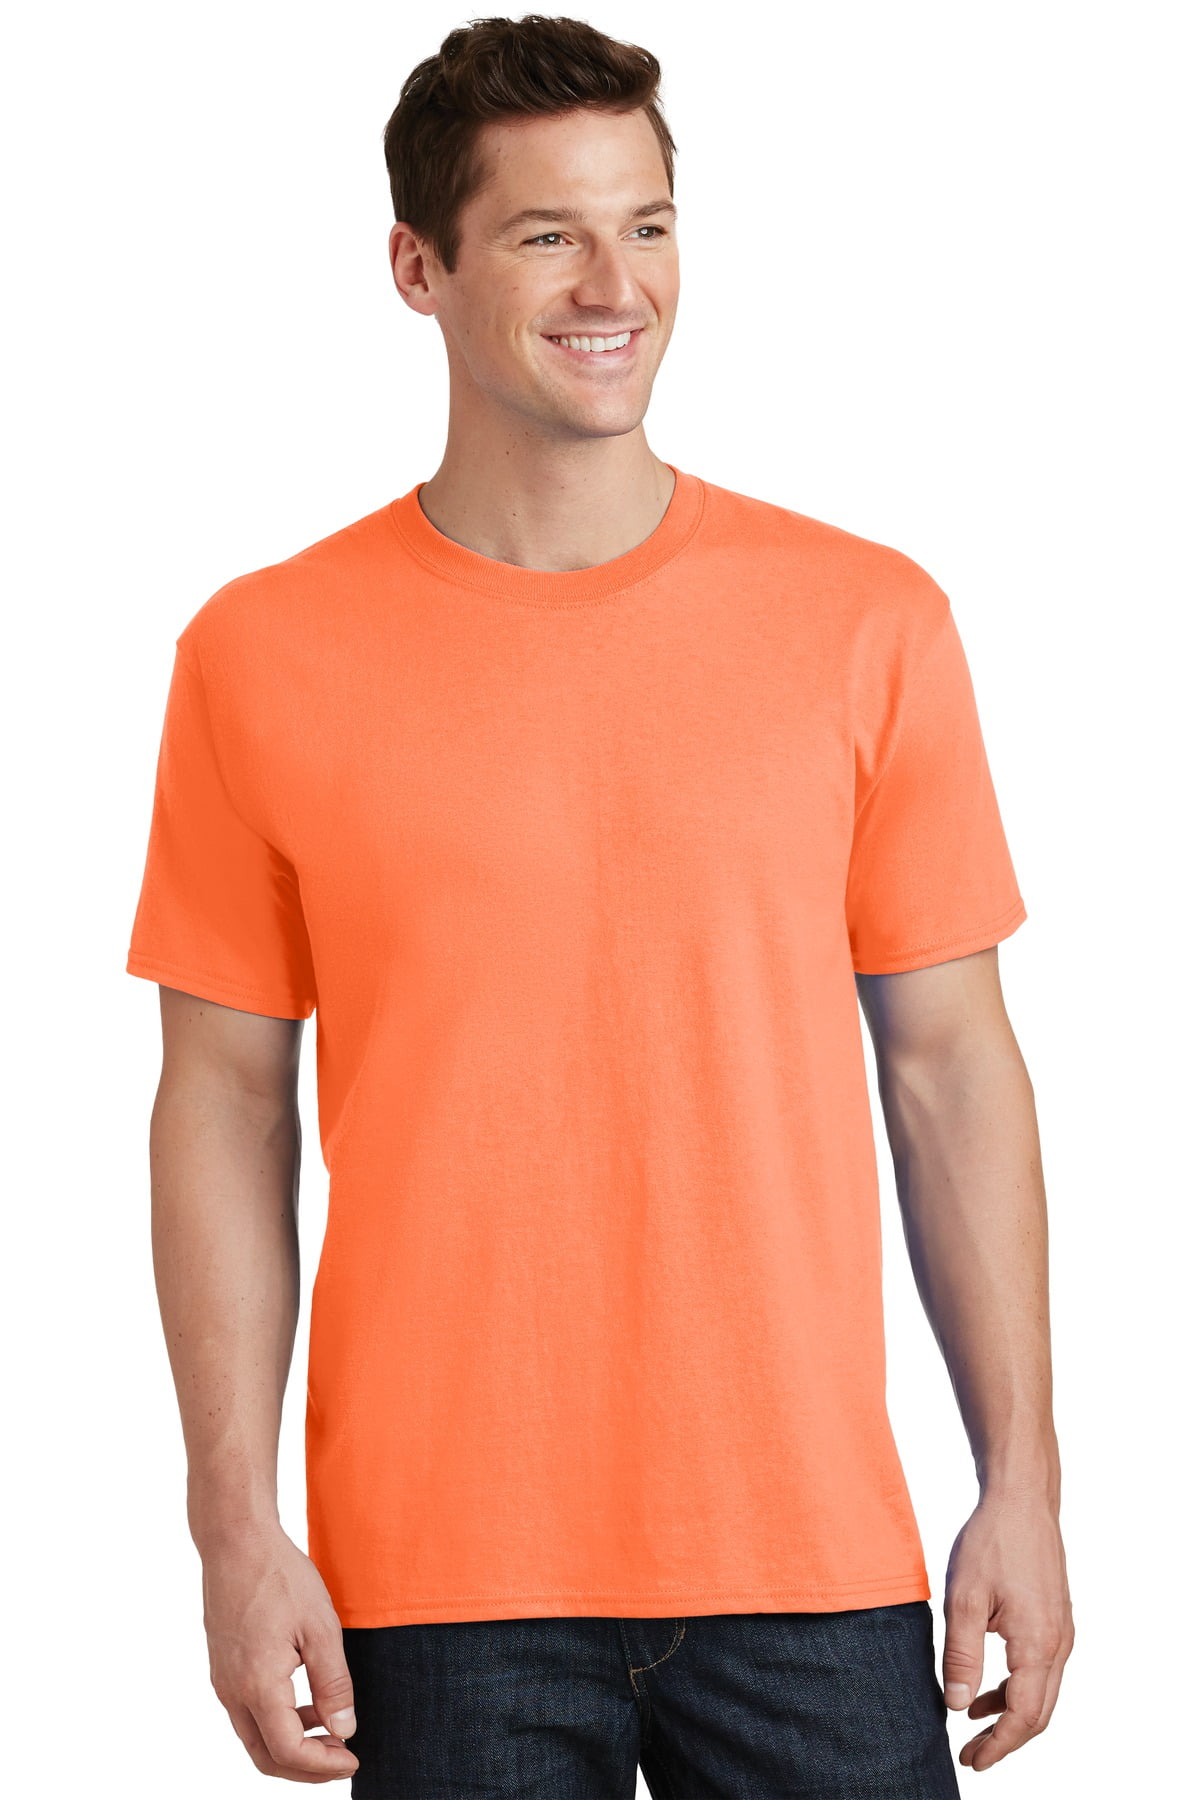 Port & Co Adult Male Men Plain Short Sleeves T-Shirt Neon Orange 2X-Large  Tall 